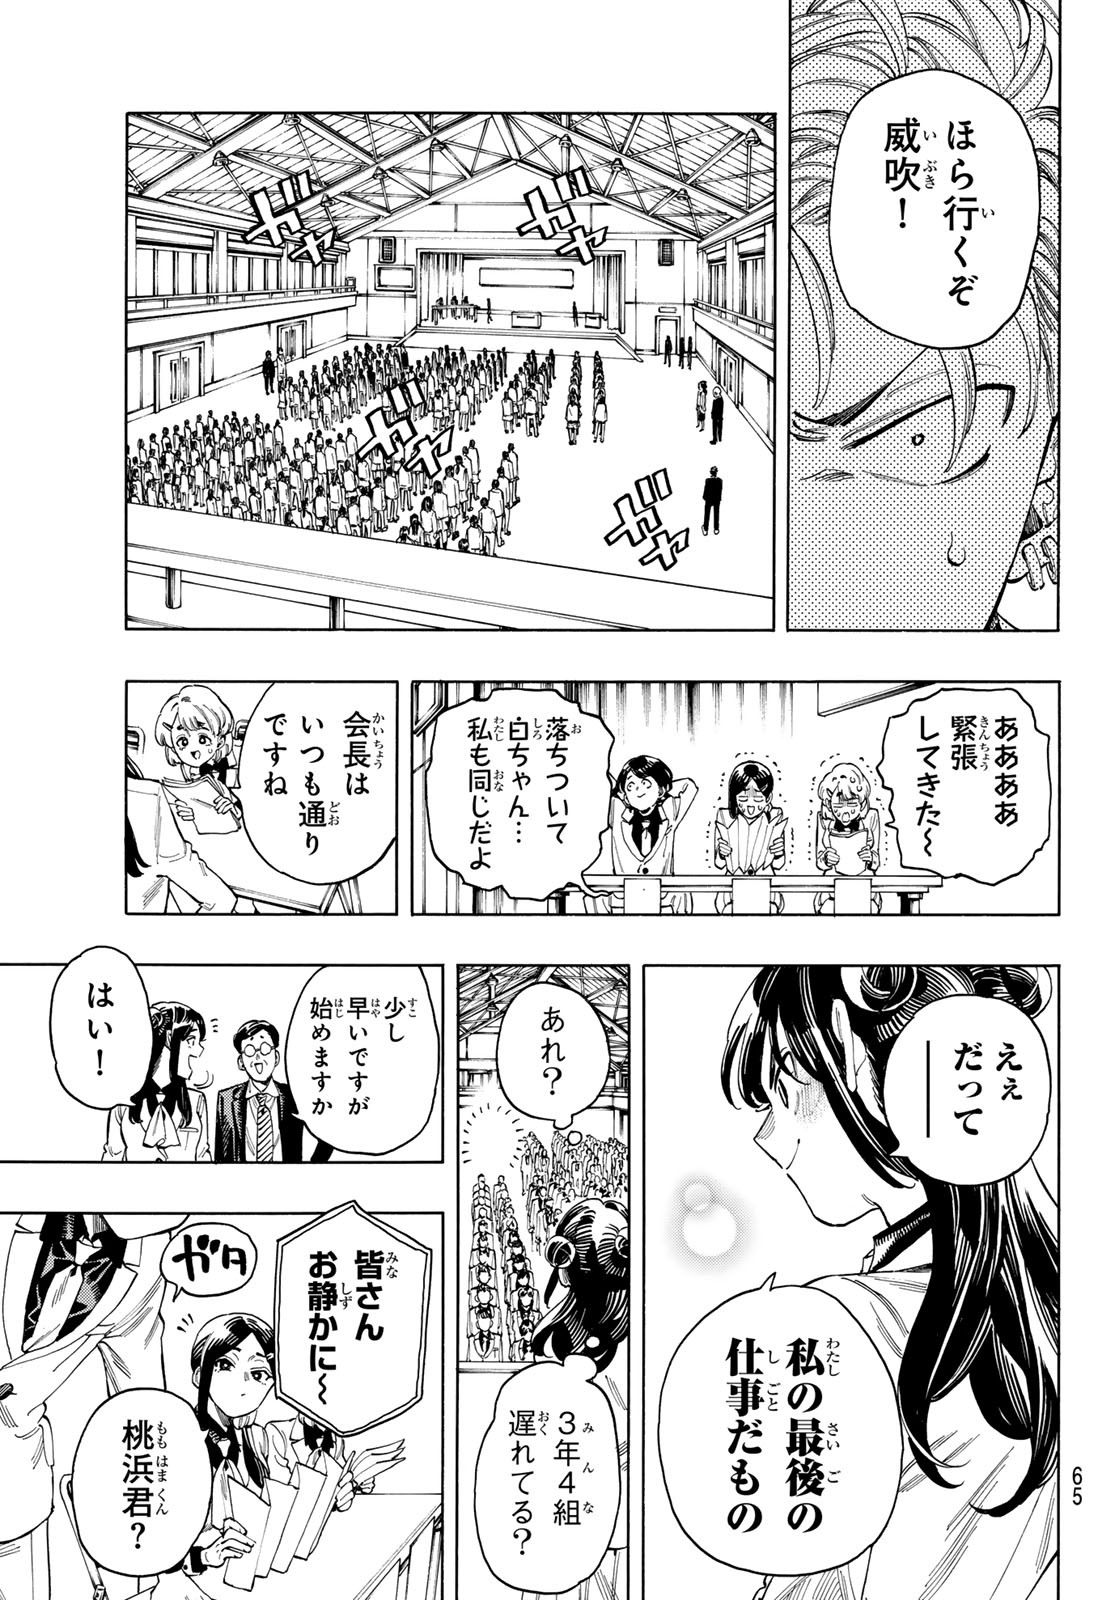 Akabane Honeko no Bodyguard - Chapter 79 - Page 19